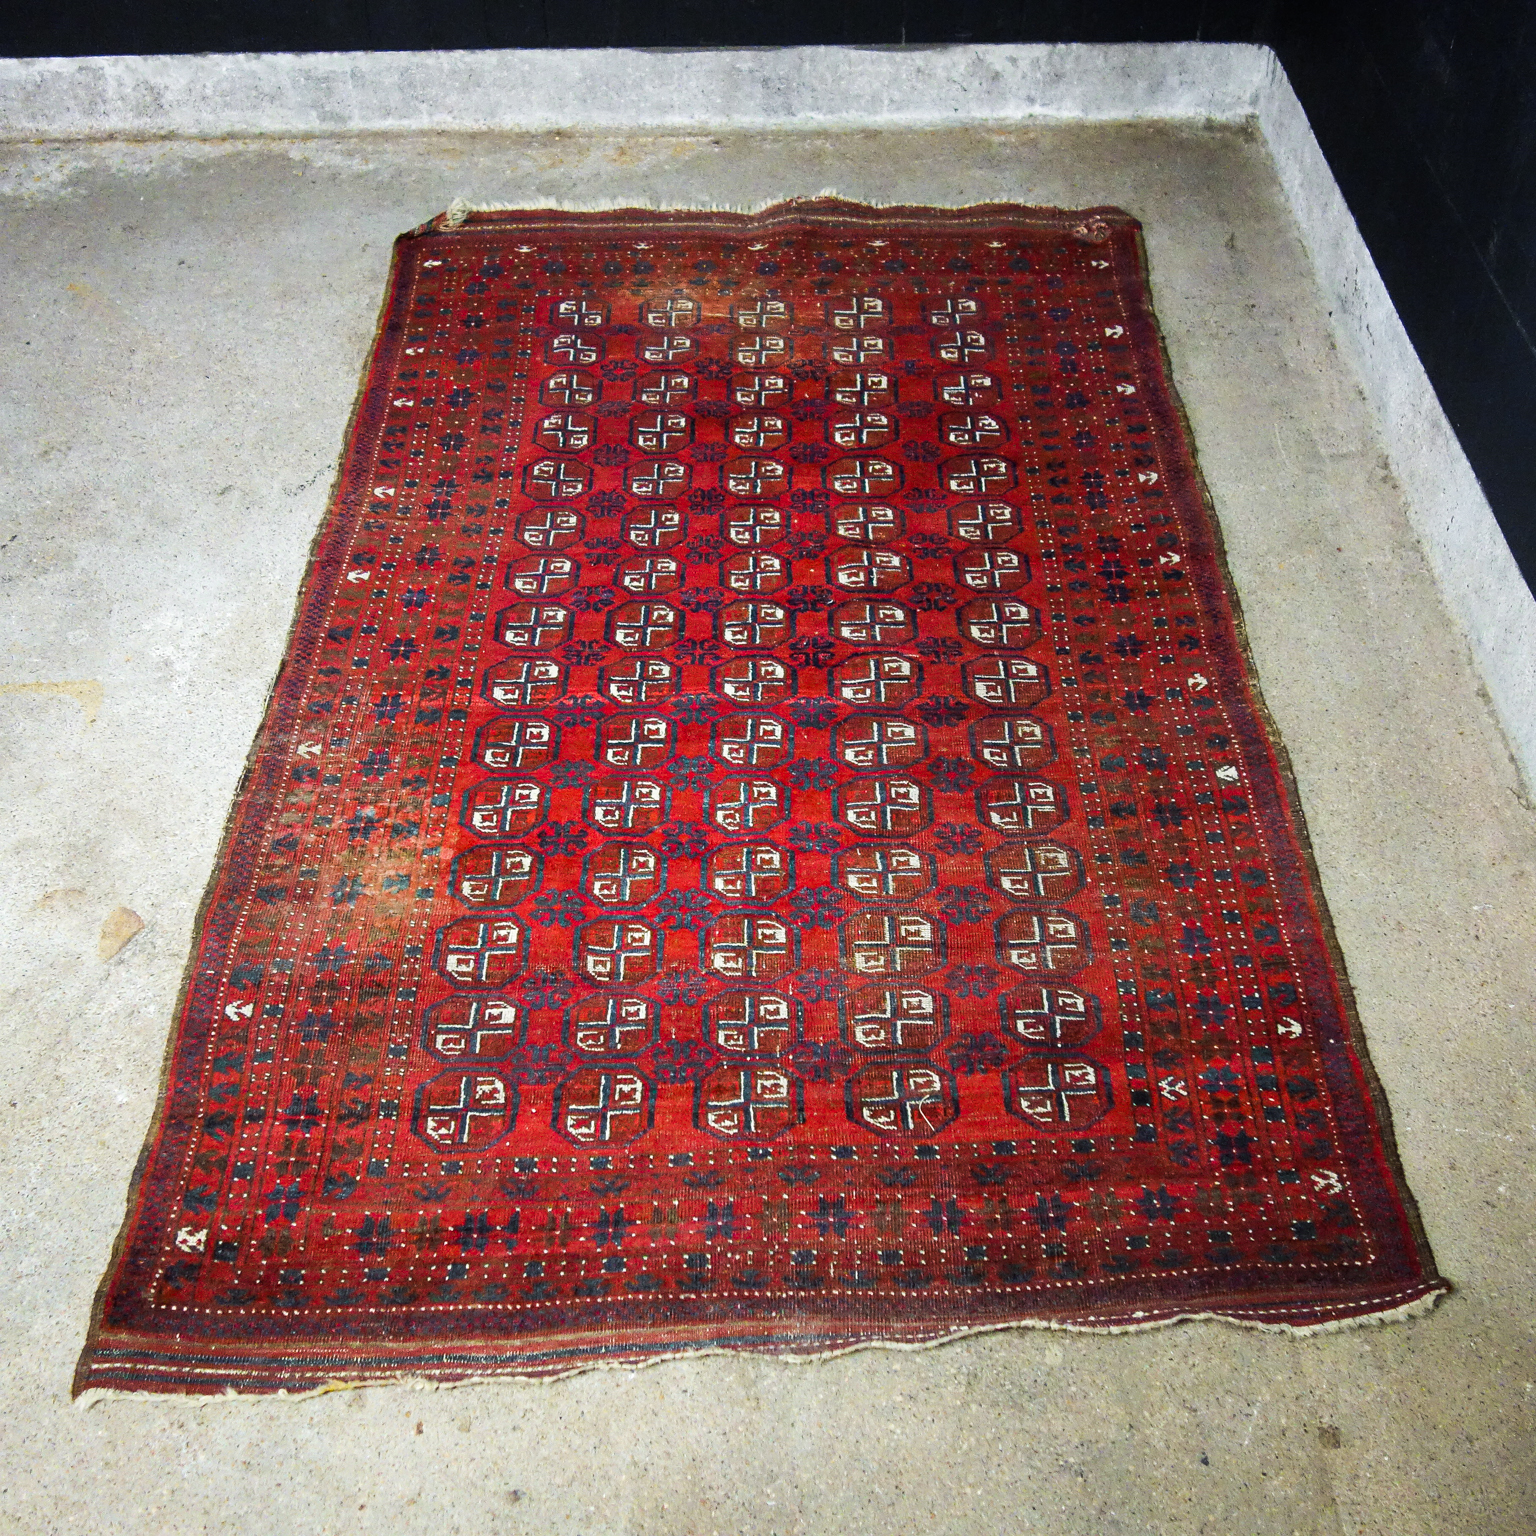 slachtoffer breken Toestand Antiek Perzisch Tapijt - 240x143 - Rood - Assortiment - Vivre Interieur  Authentique